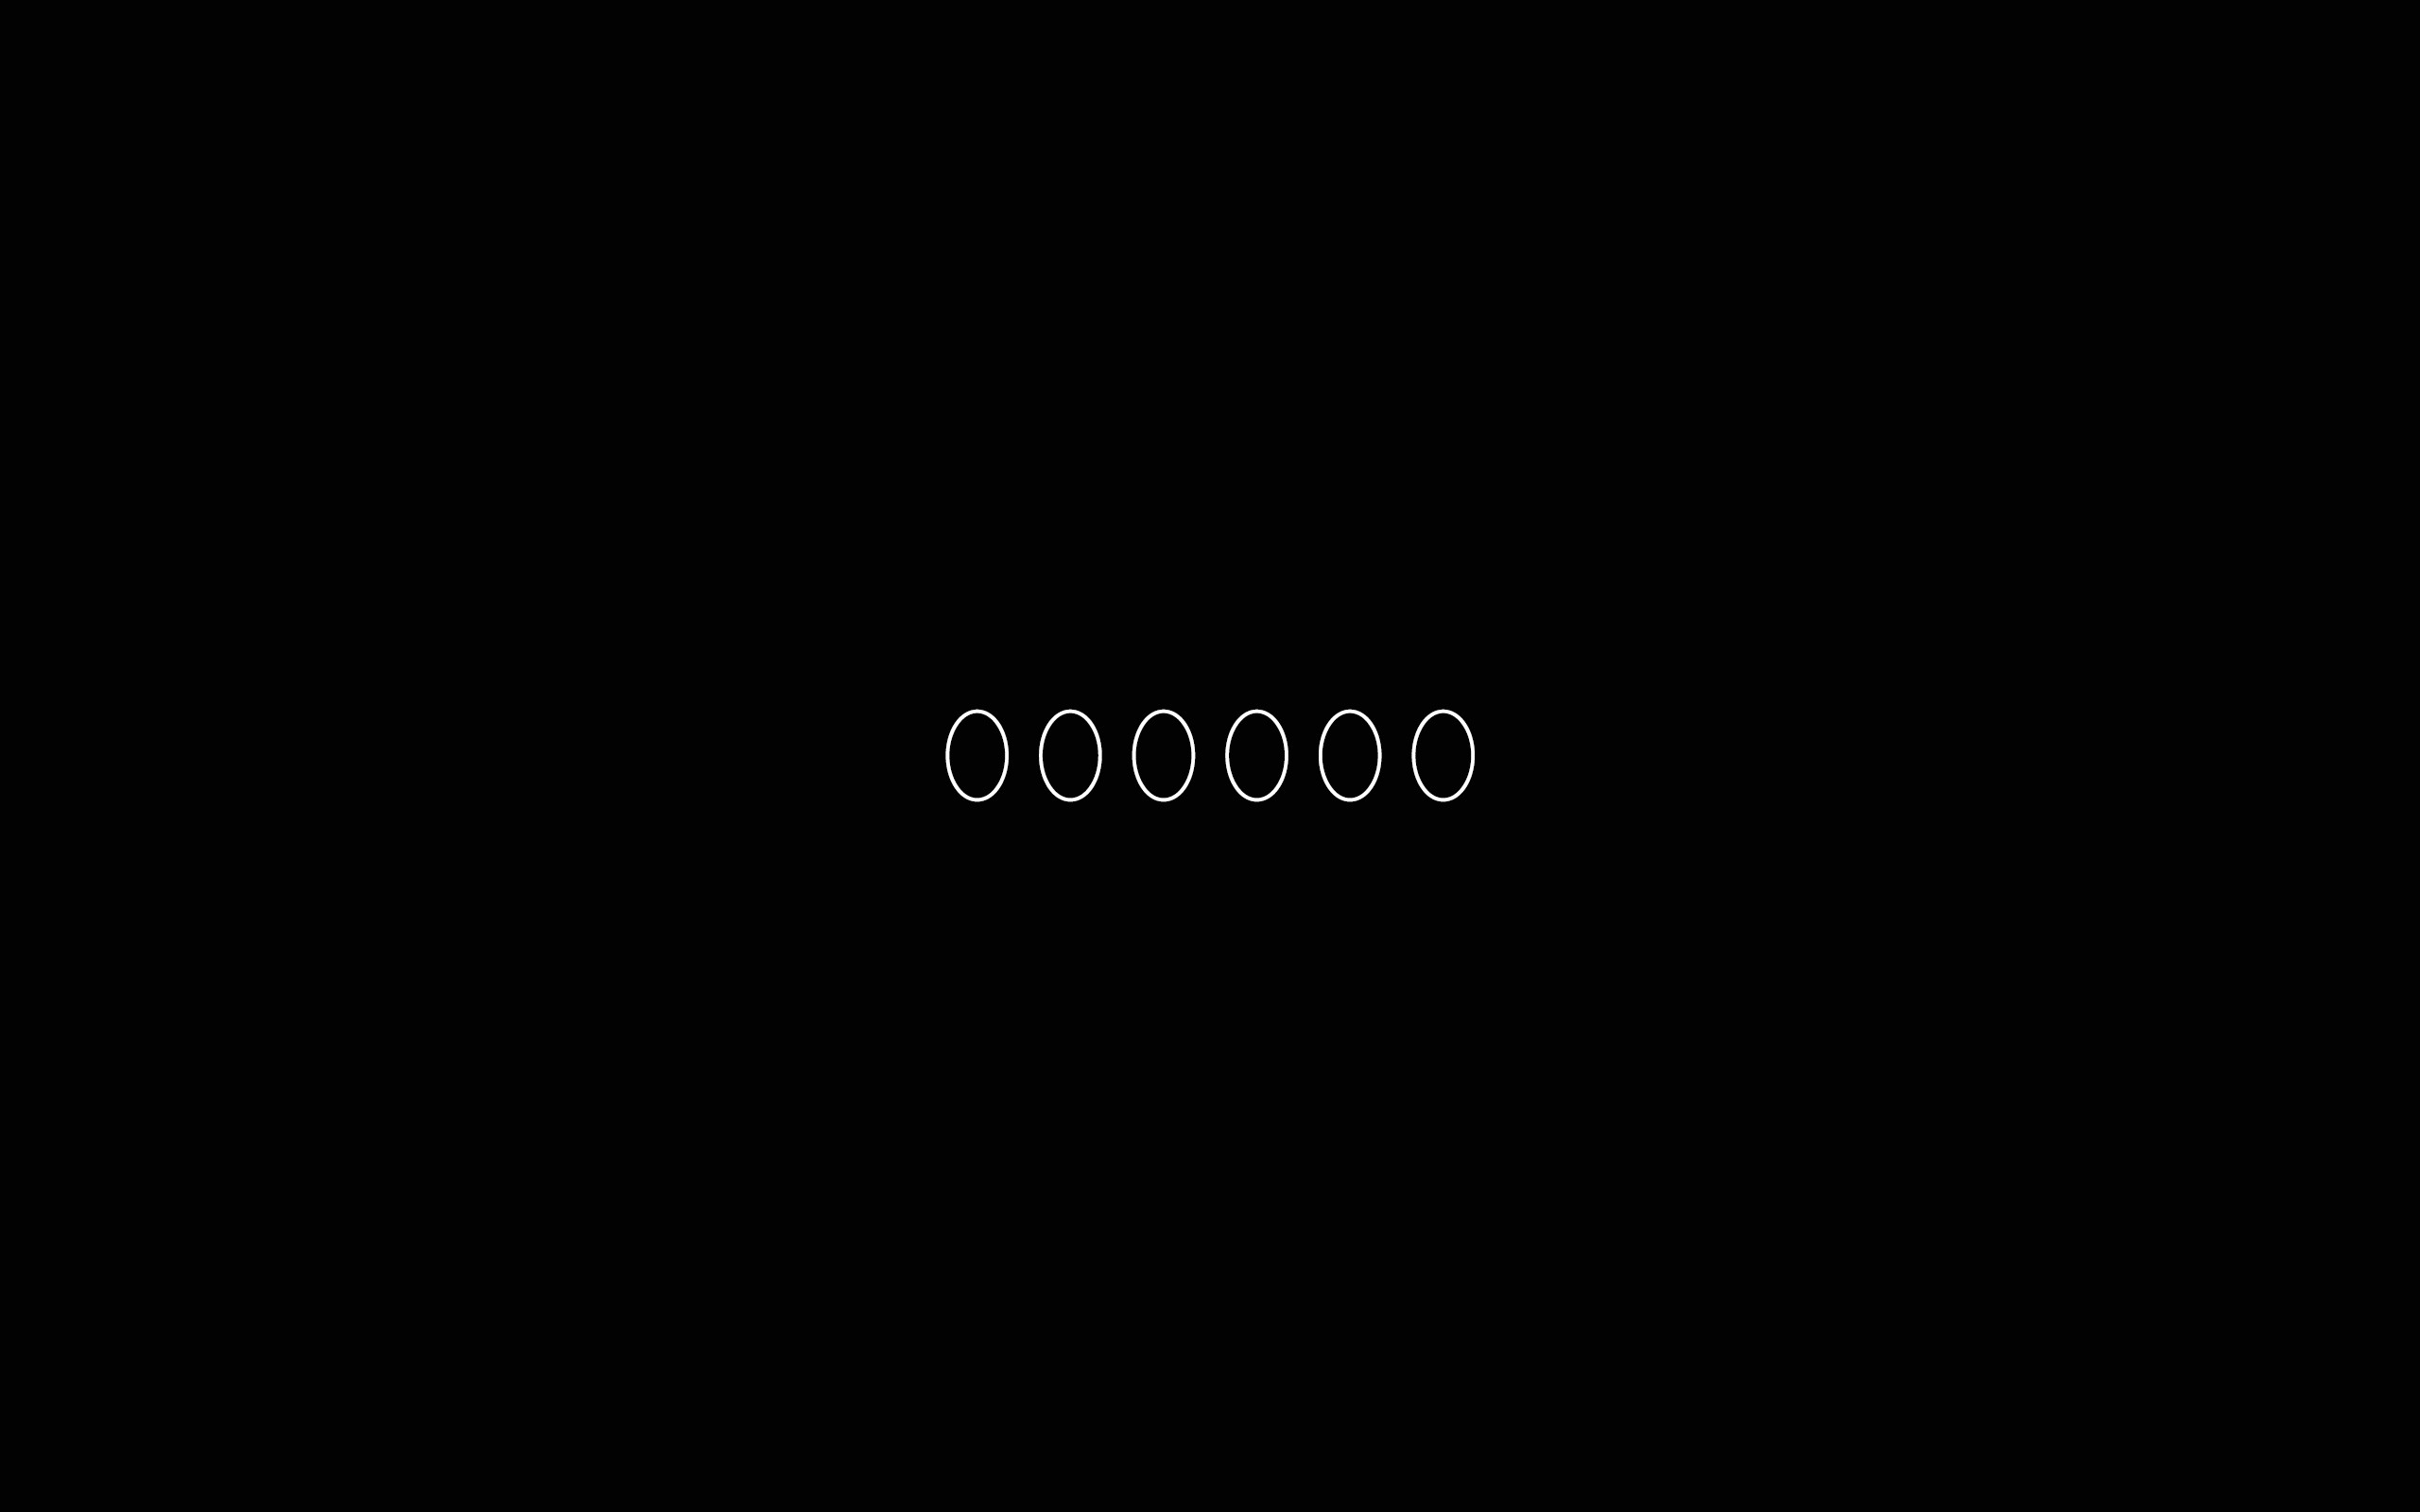 General 2560x1600 black retina numbers black background minimalism simple background